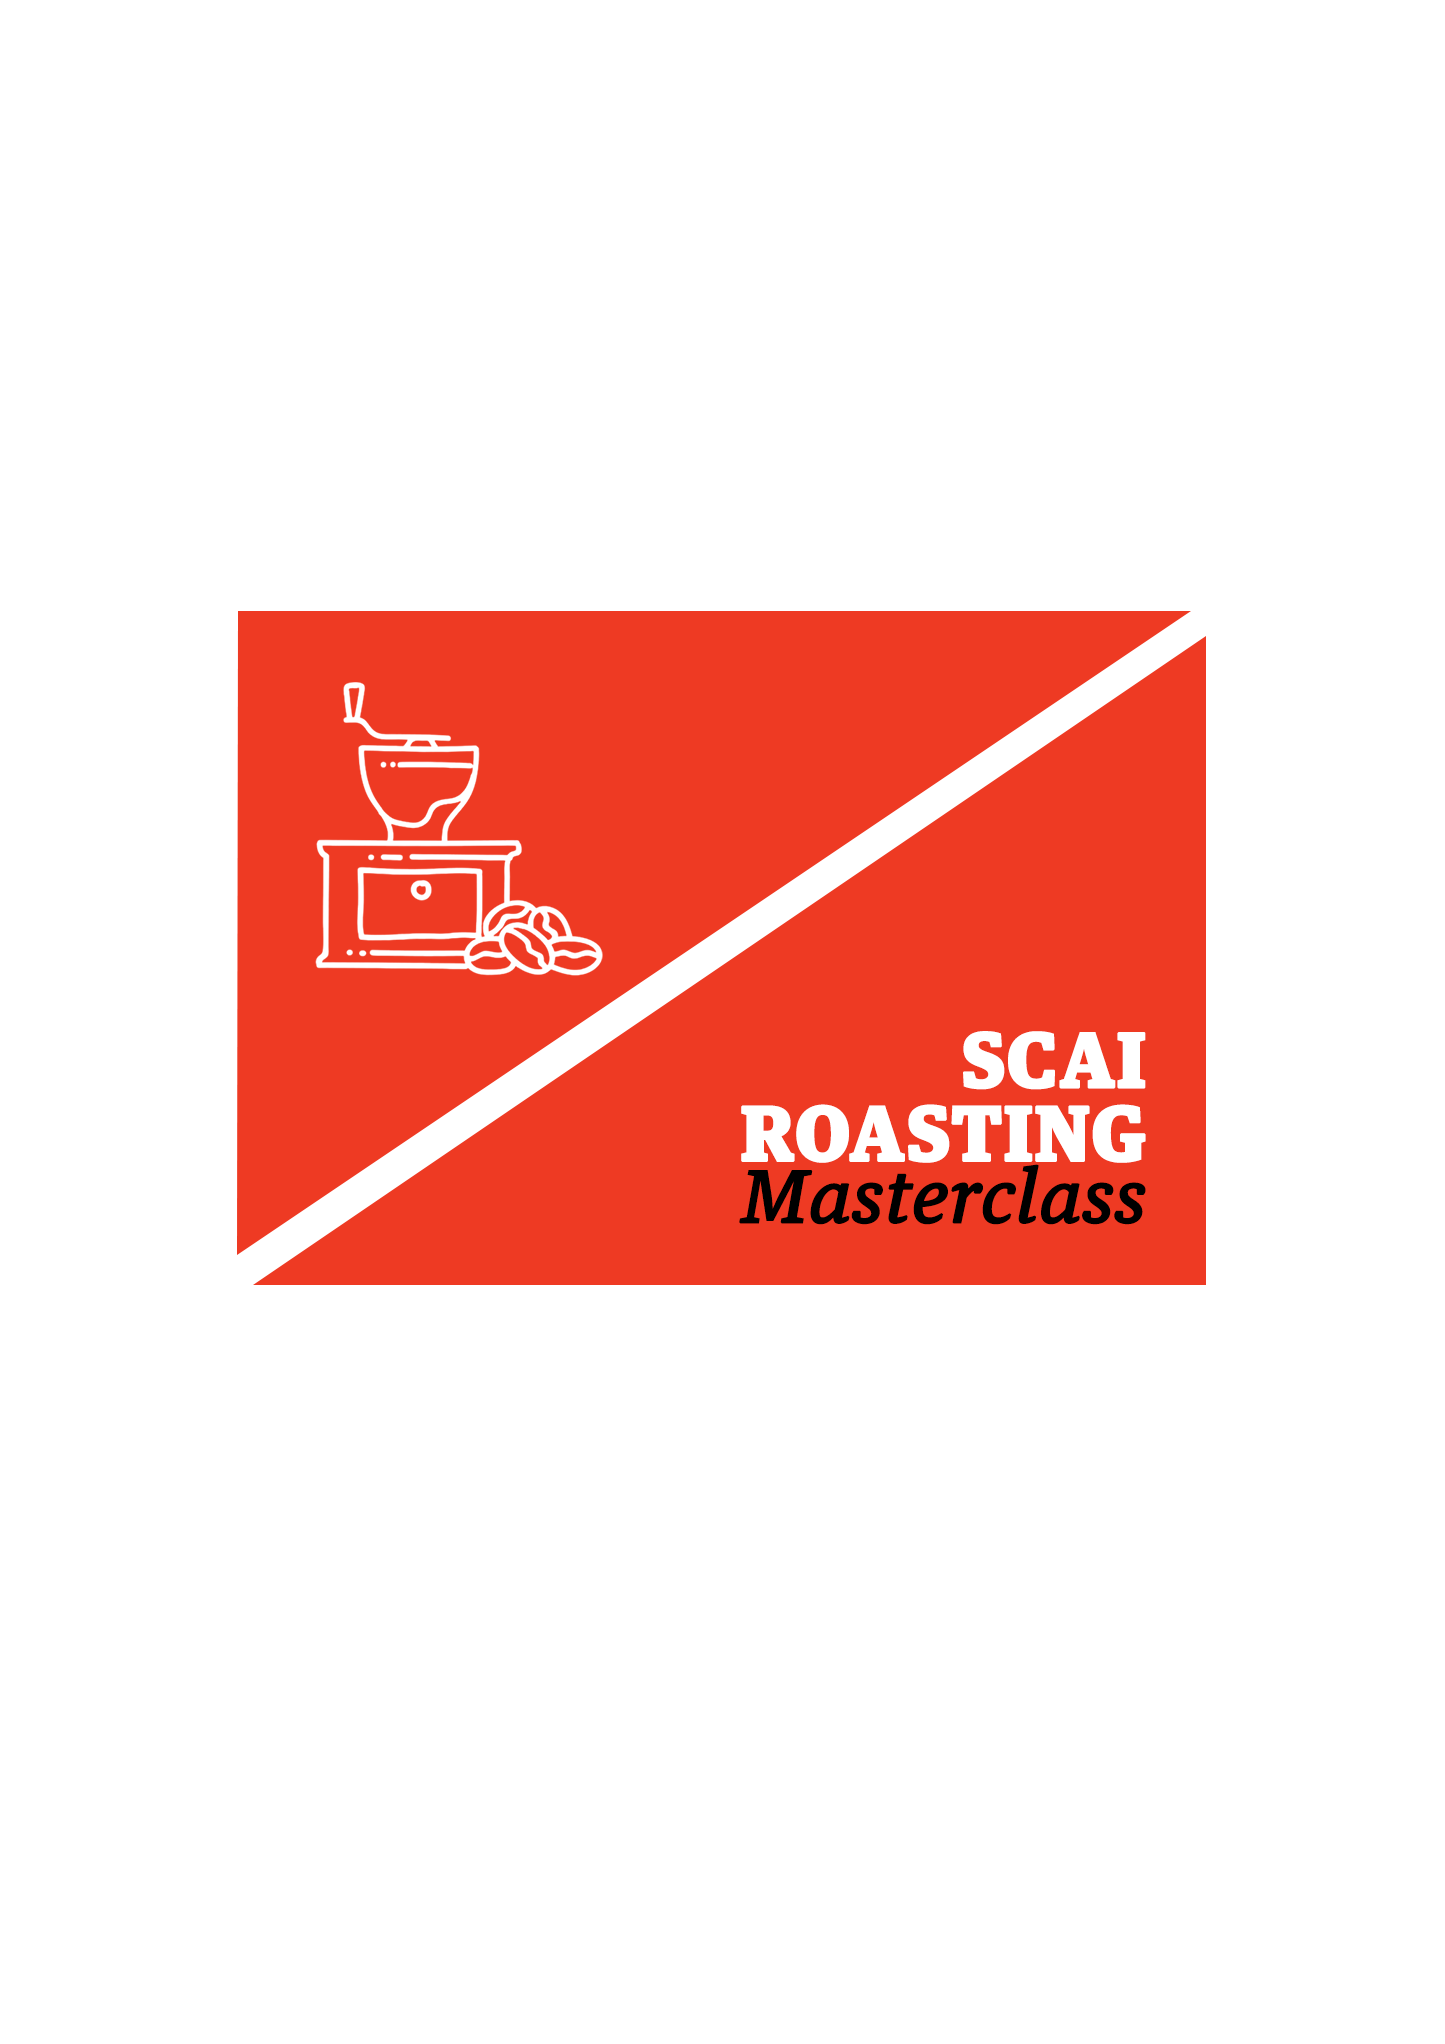 SCAI Roasting Masterclass